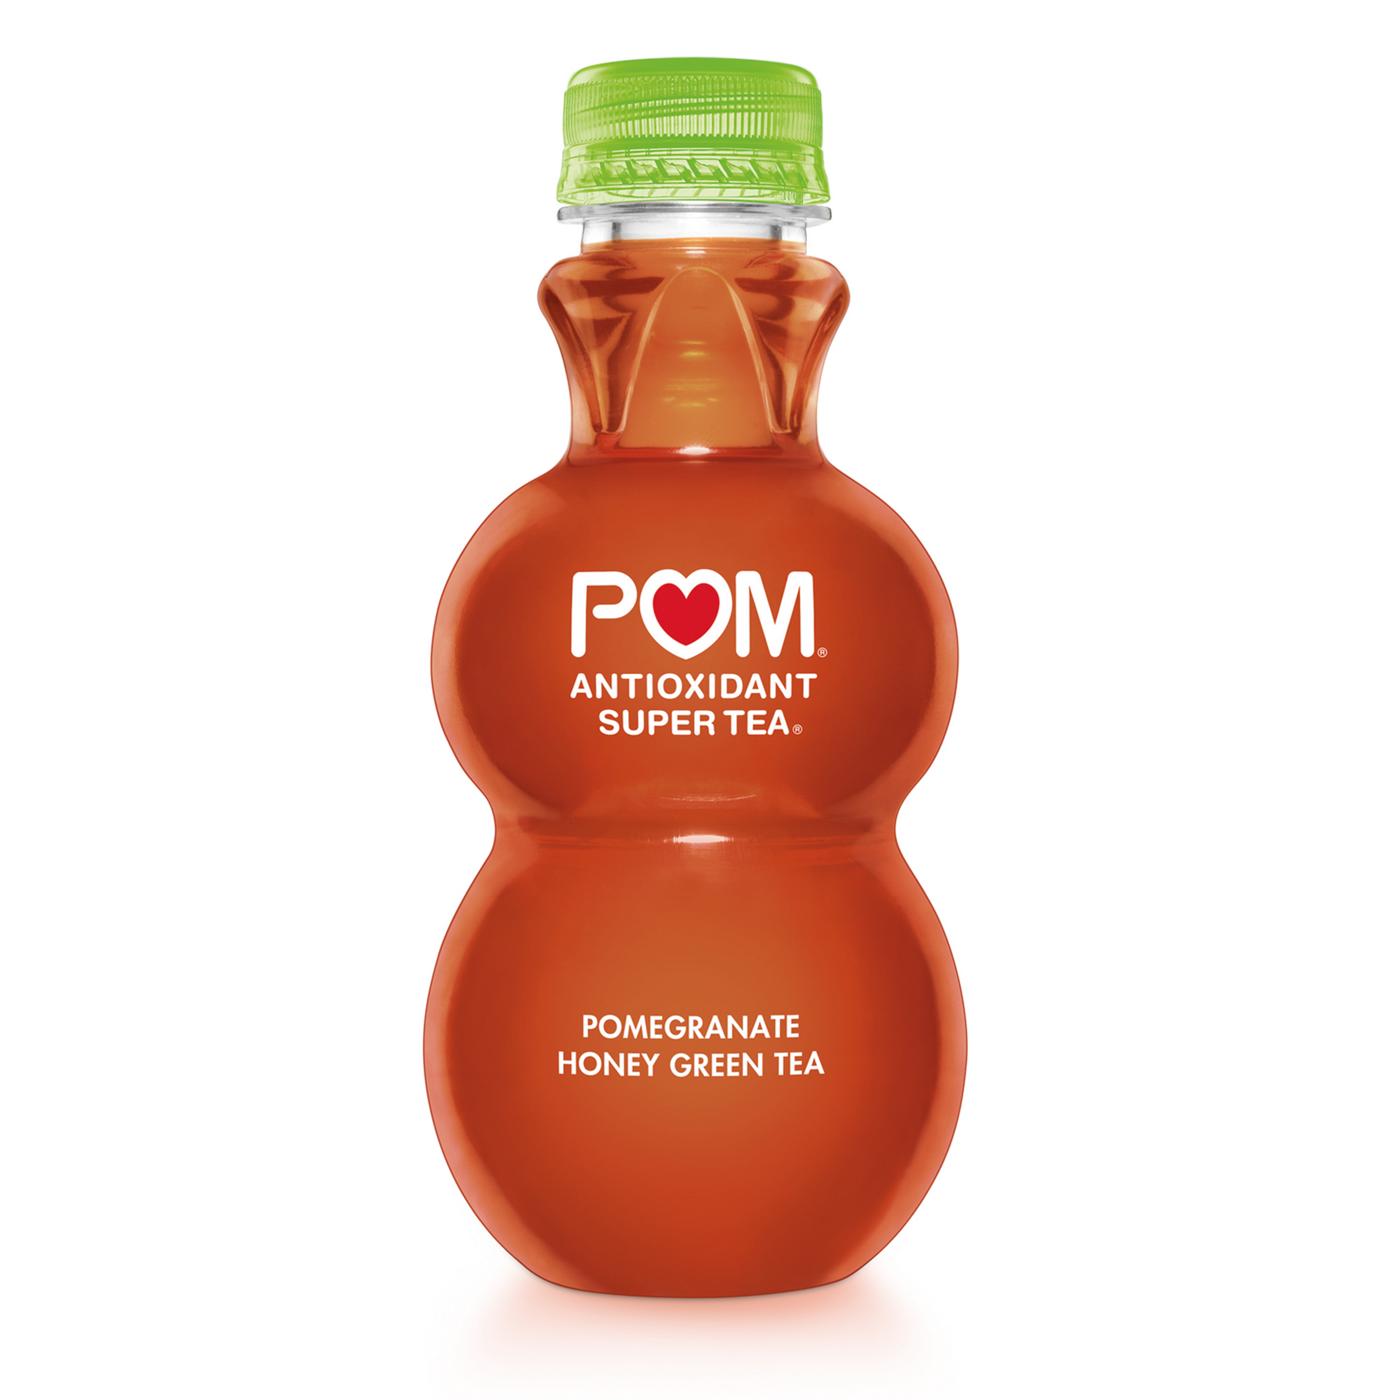 Pom Antioxidant Super Tea - Pomegranate Honey Green Tea; image 1 of 3